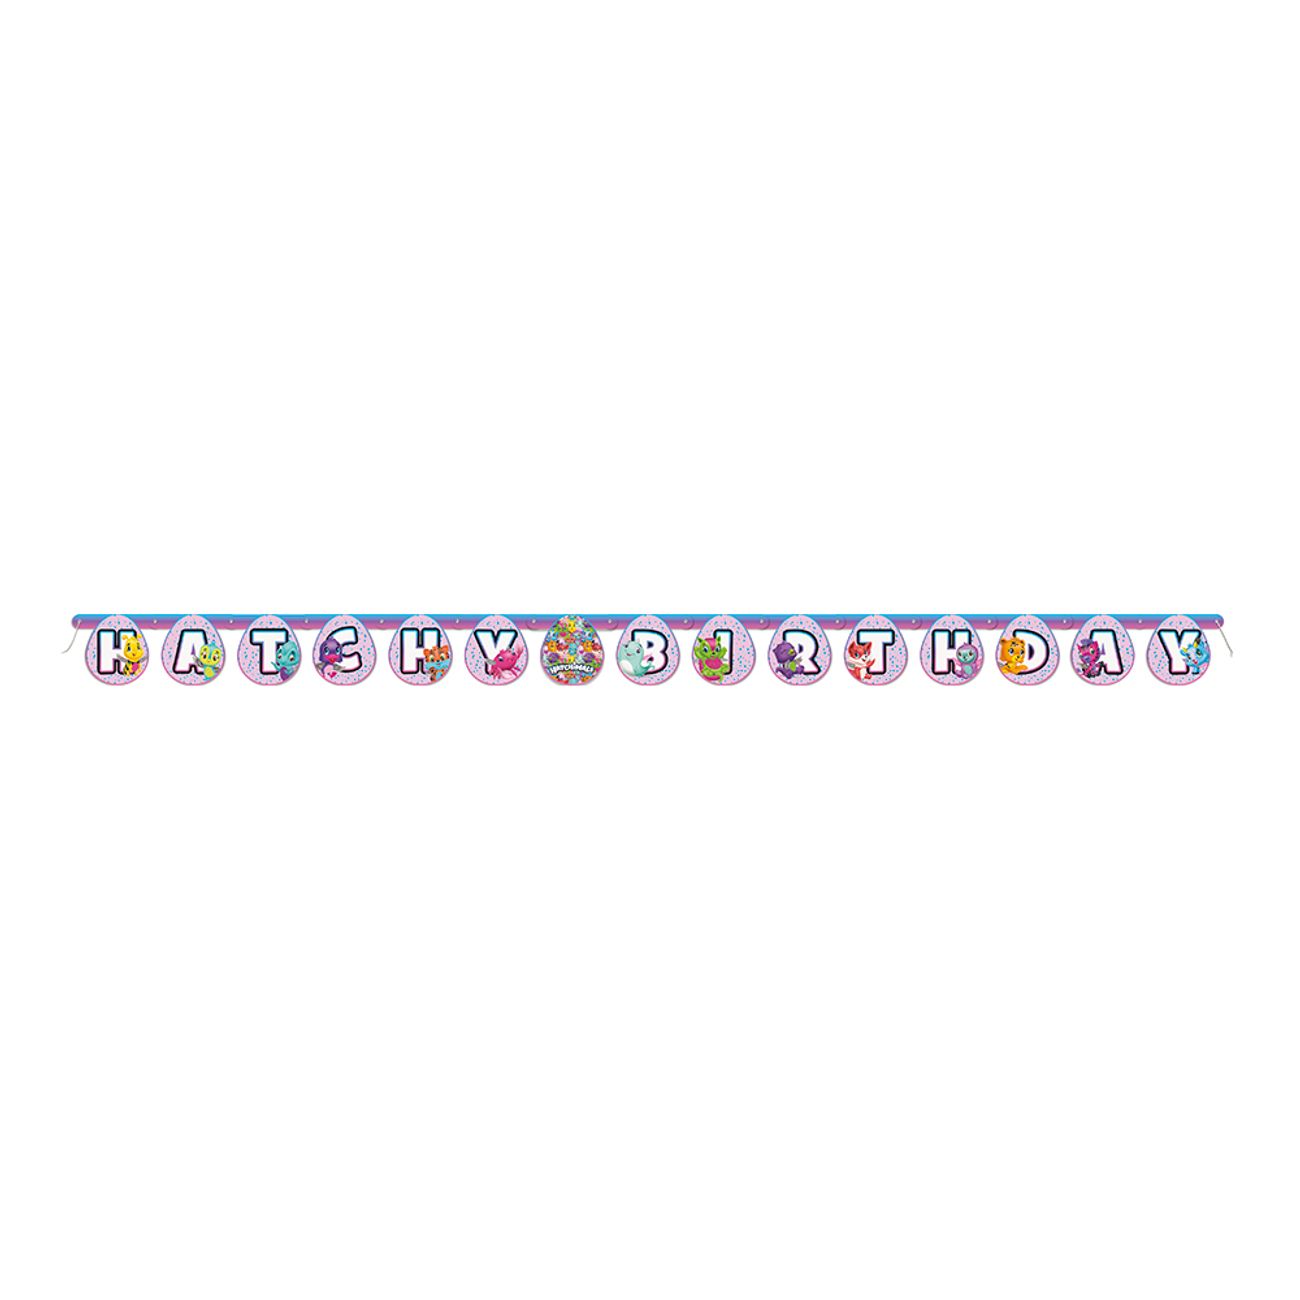 hatchimals-girlang-happy-birthday-1